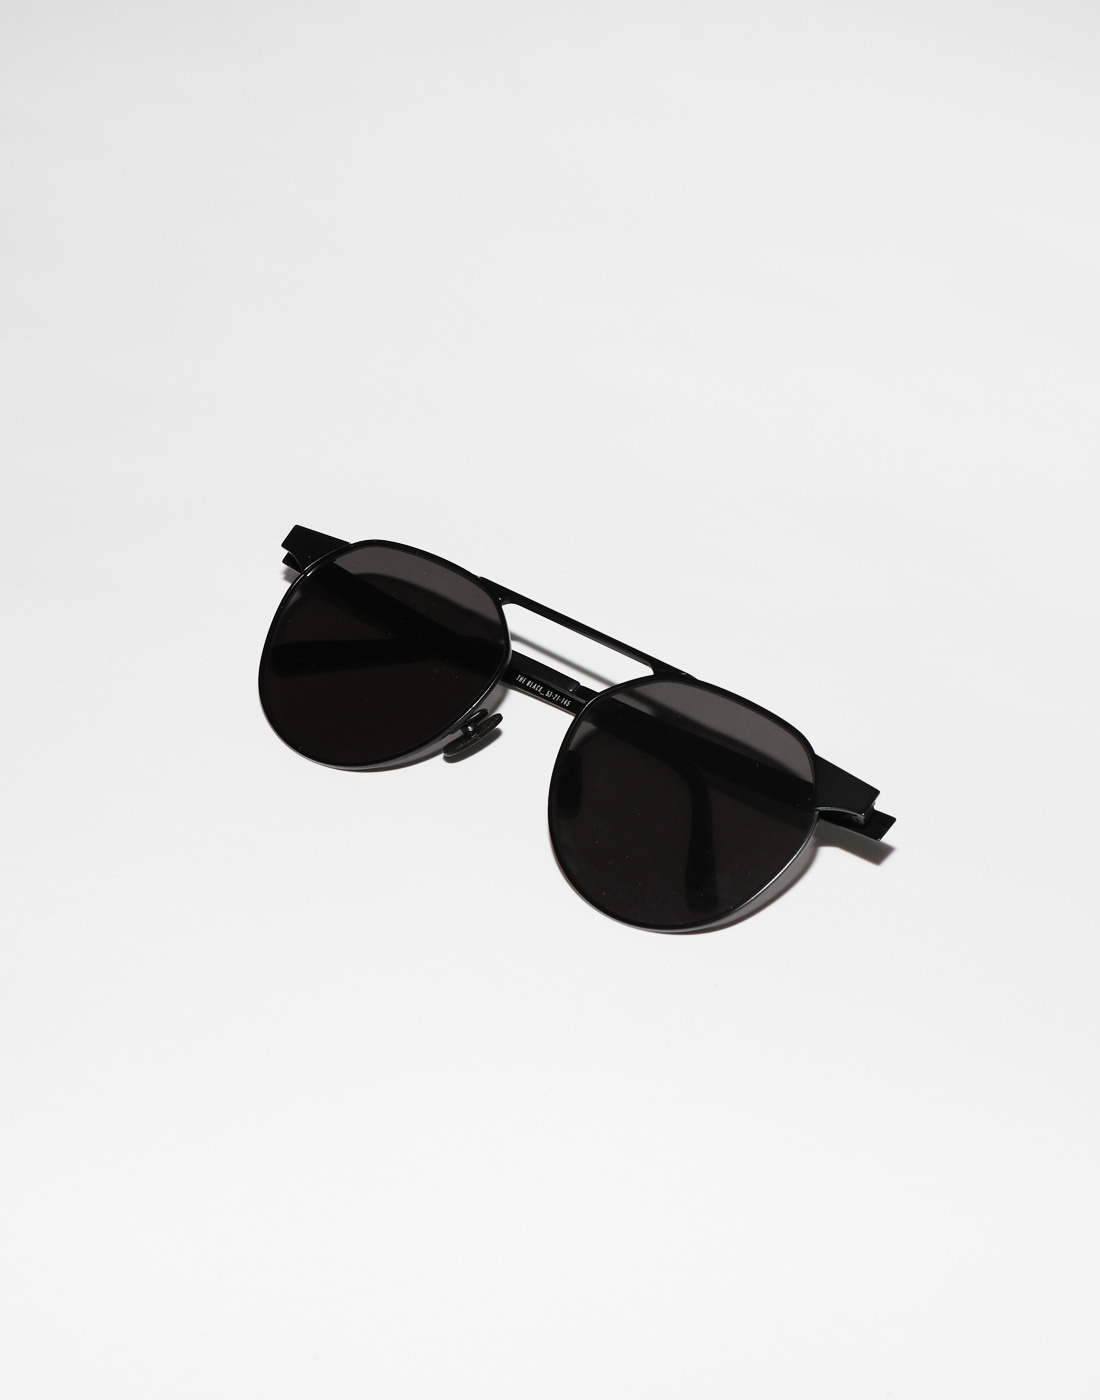 STEALER Horizon Sunglasses, Black